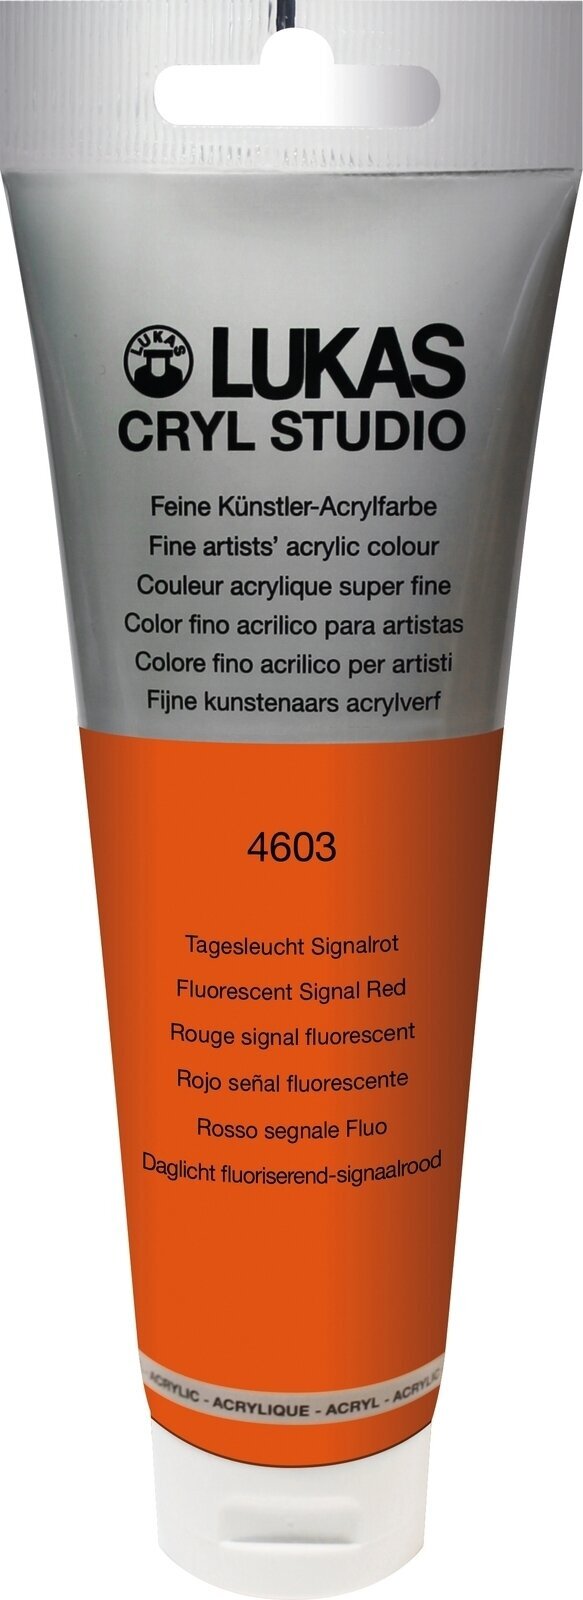 Akrylová barva Lukas Cryl Studio Acrylic Paint Plastic Tube Akrylová barva Fluorescent Signal Red 125 ml 1 ks